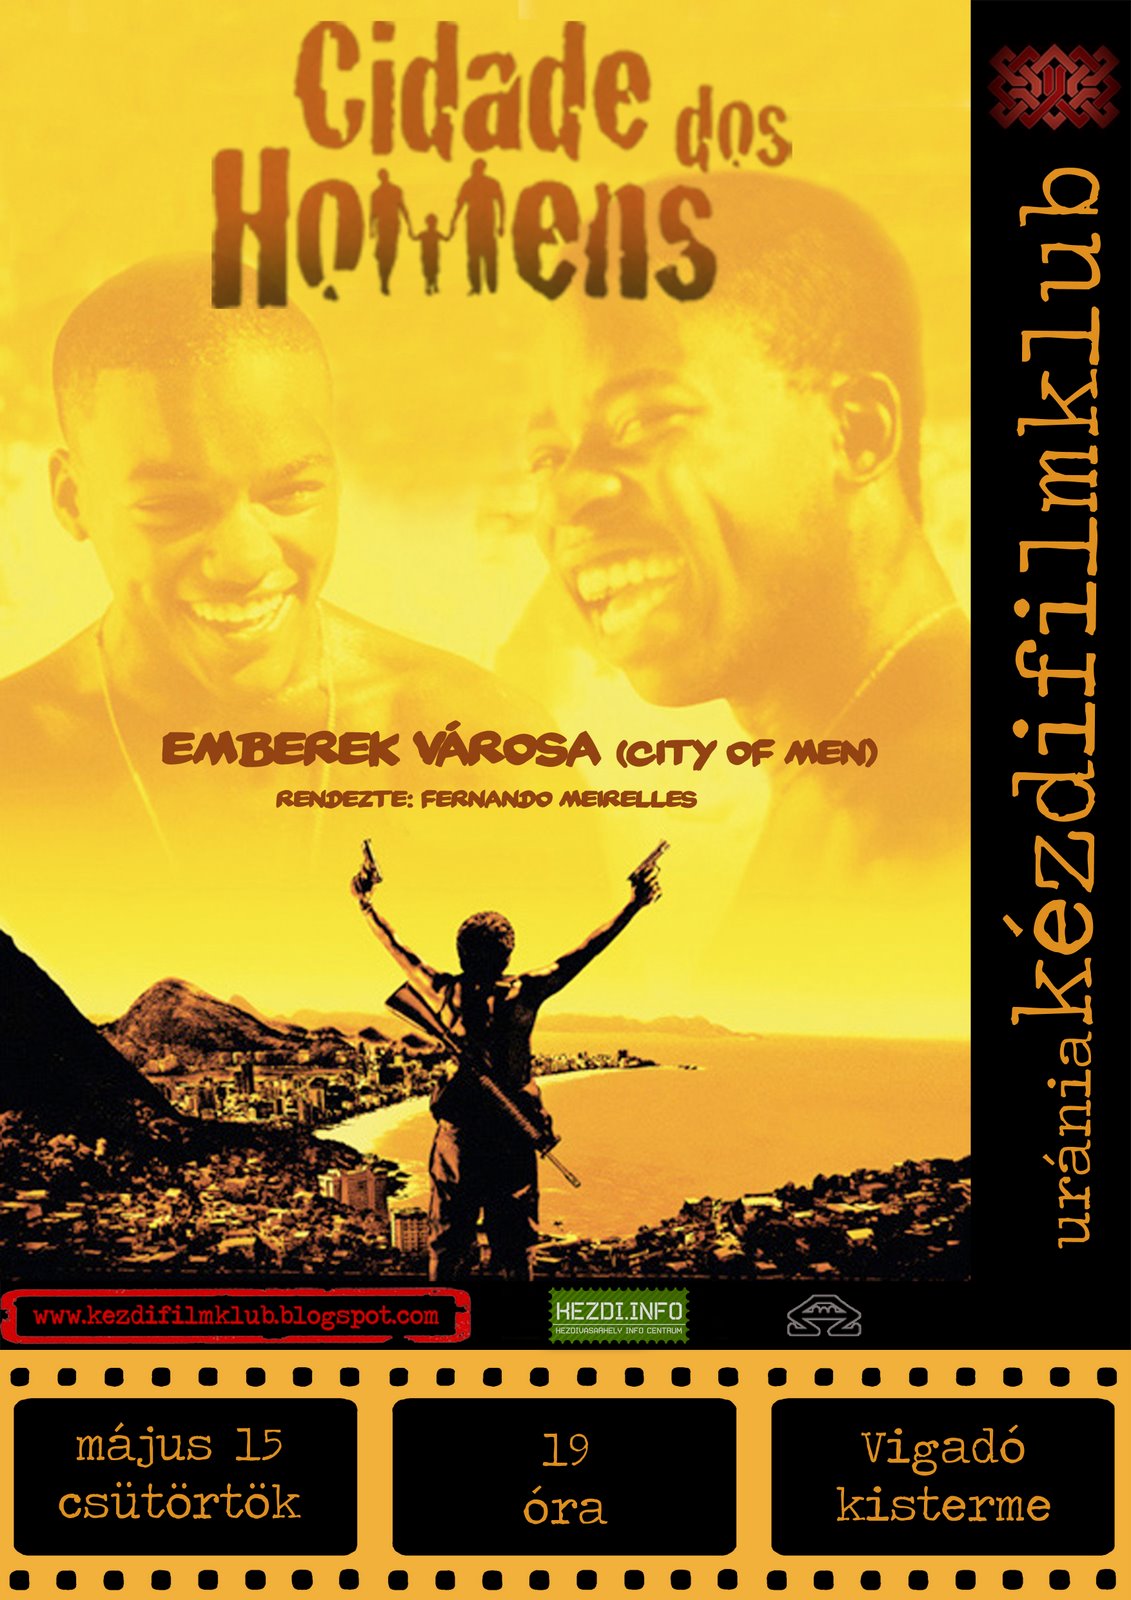 2008.05.15 - Cidade dos Homens (Emberek Vrosa) - Filmklub